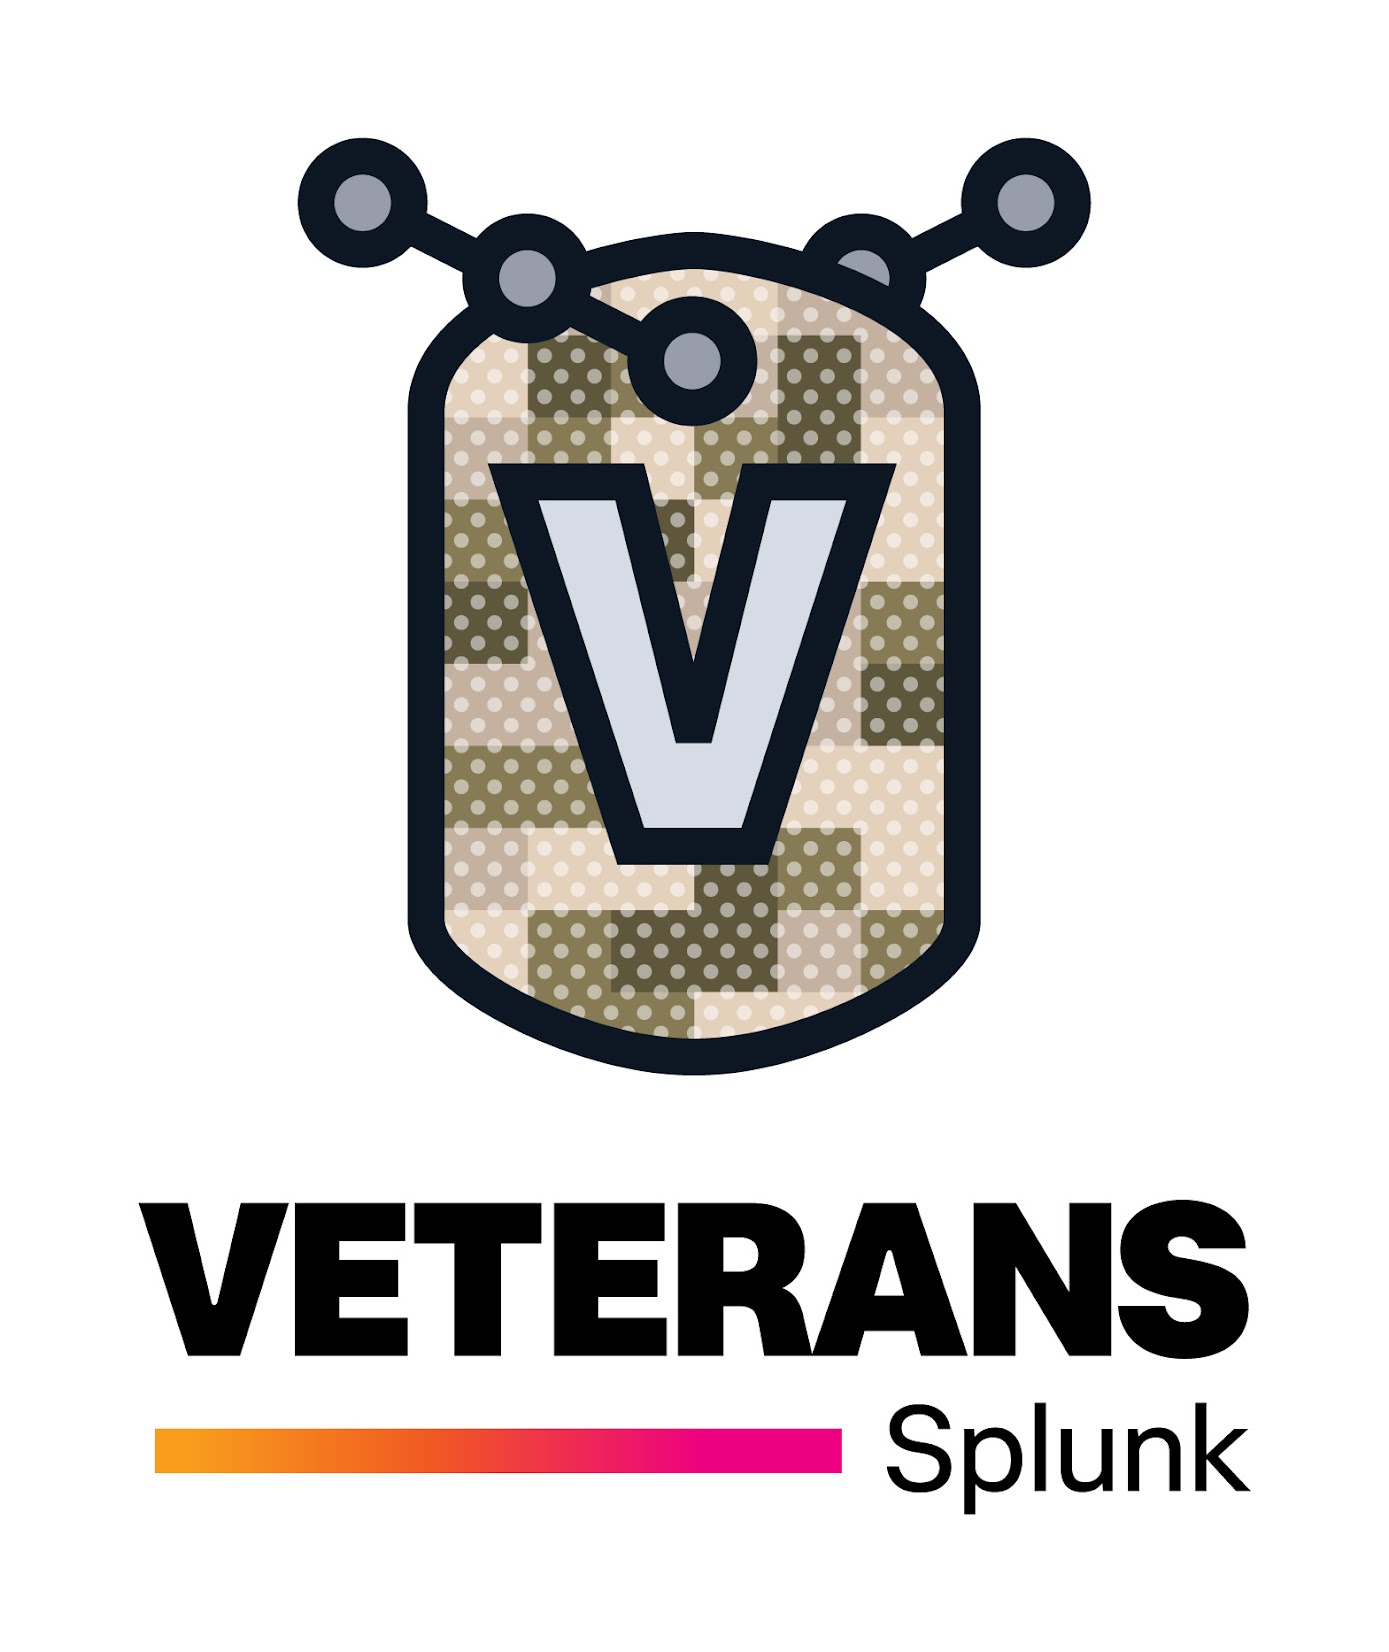 Veterans logo 